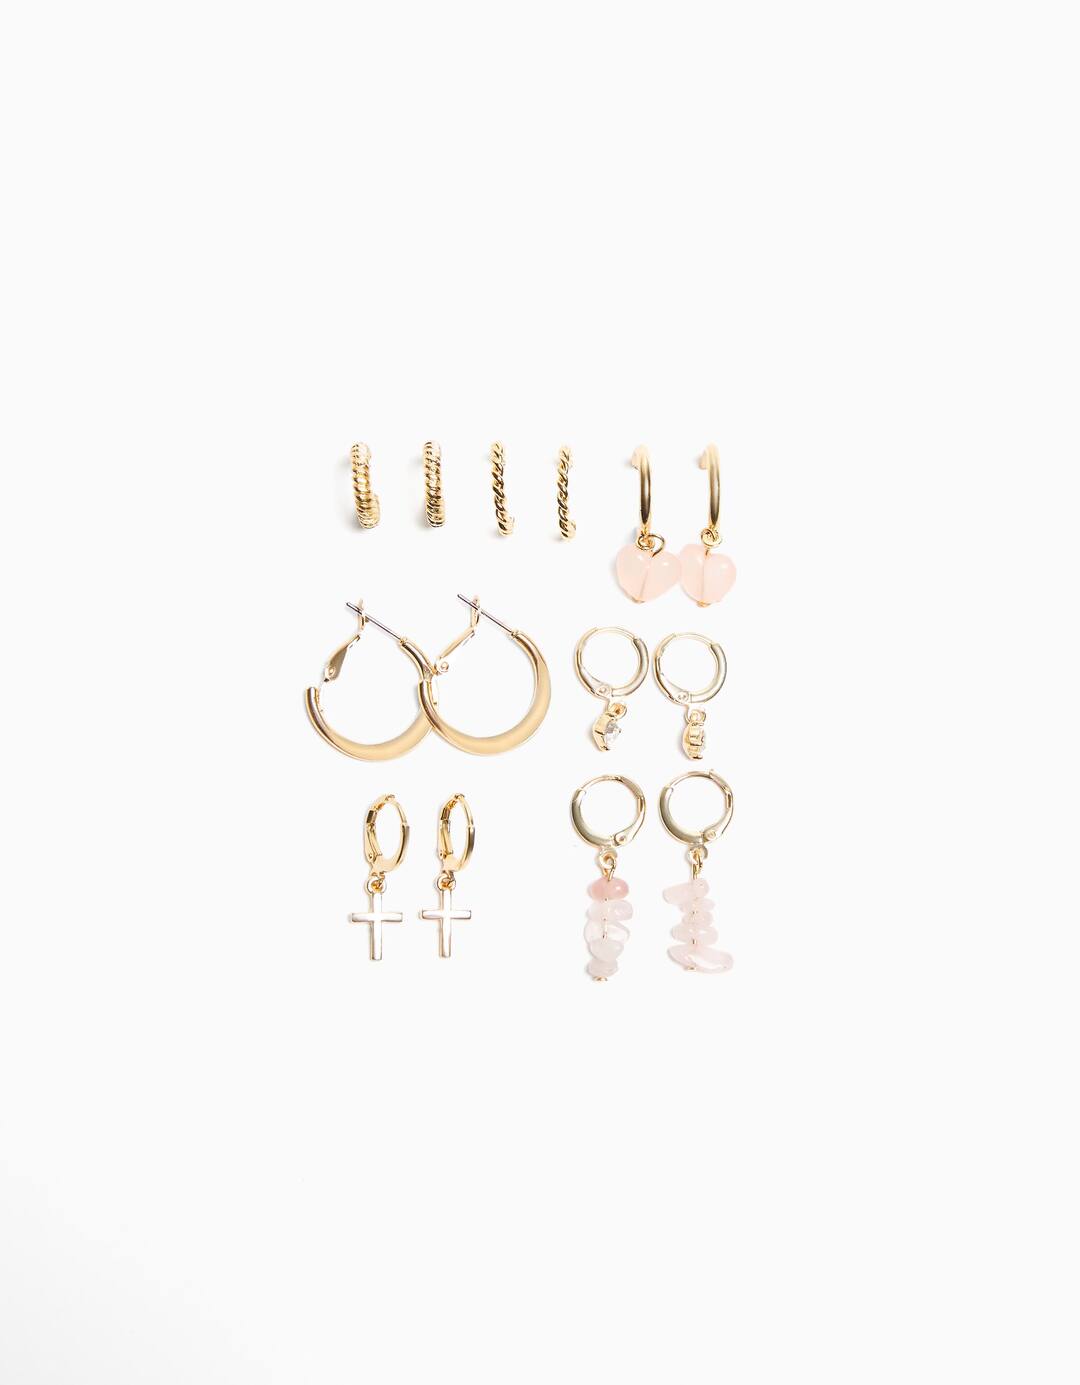 Set of 7 pairs of rhinestone, cross and charm earrings